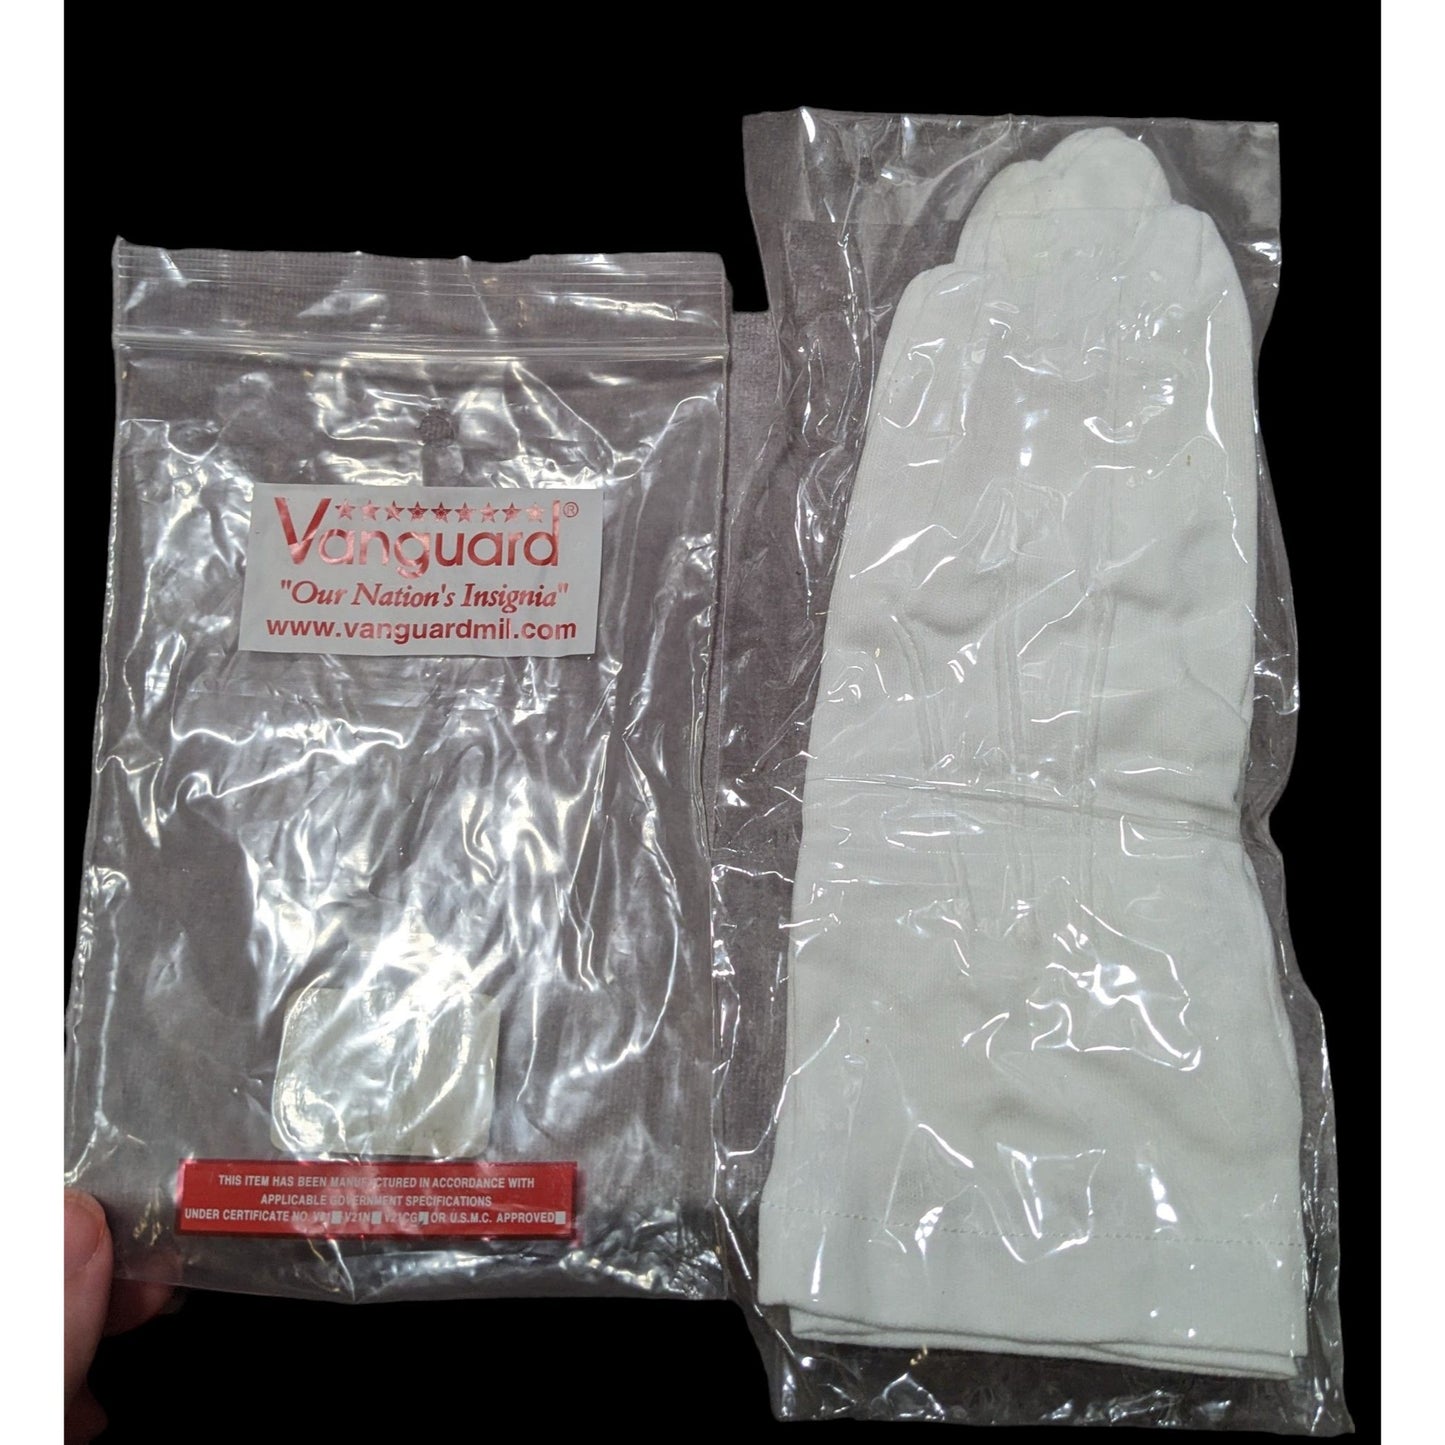 Vanguard White Cotton Snap Wrist Gloves